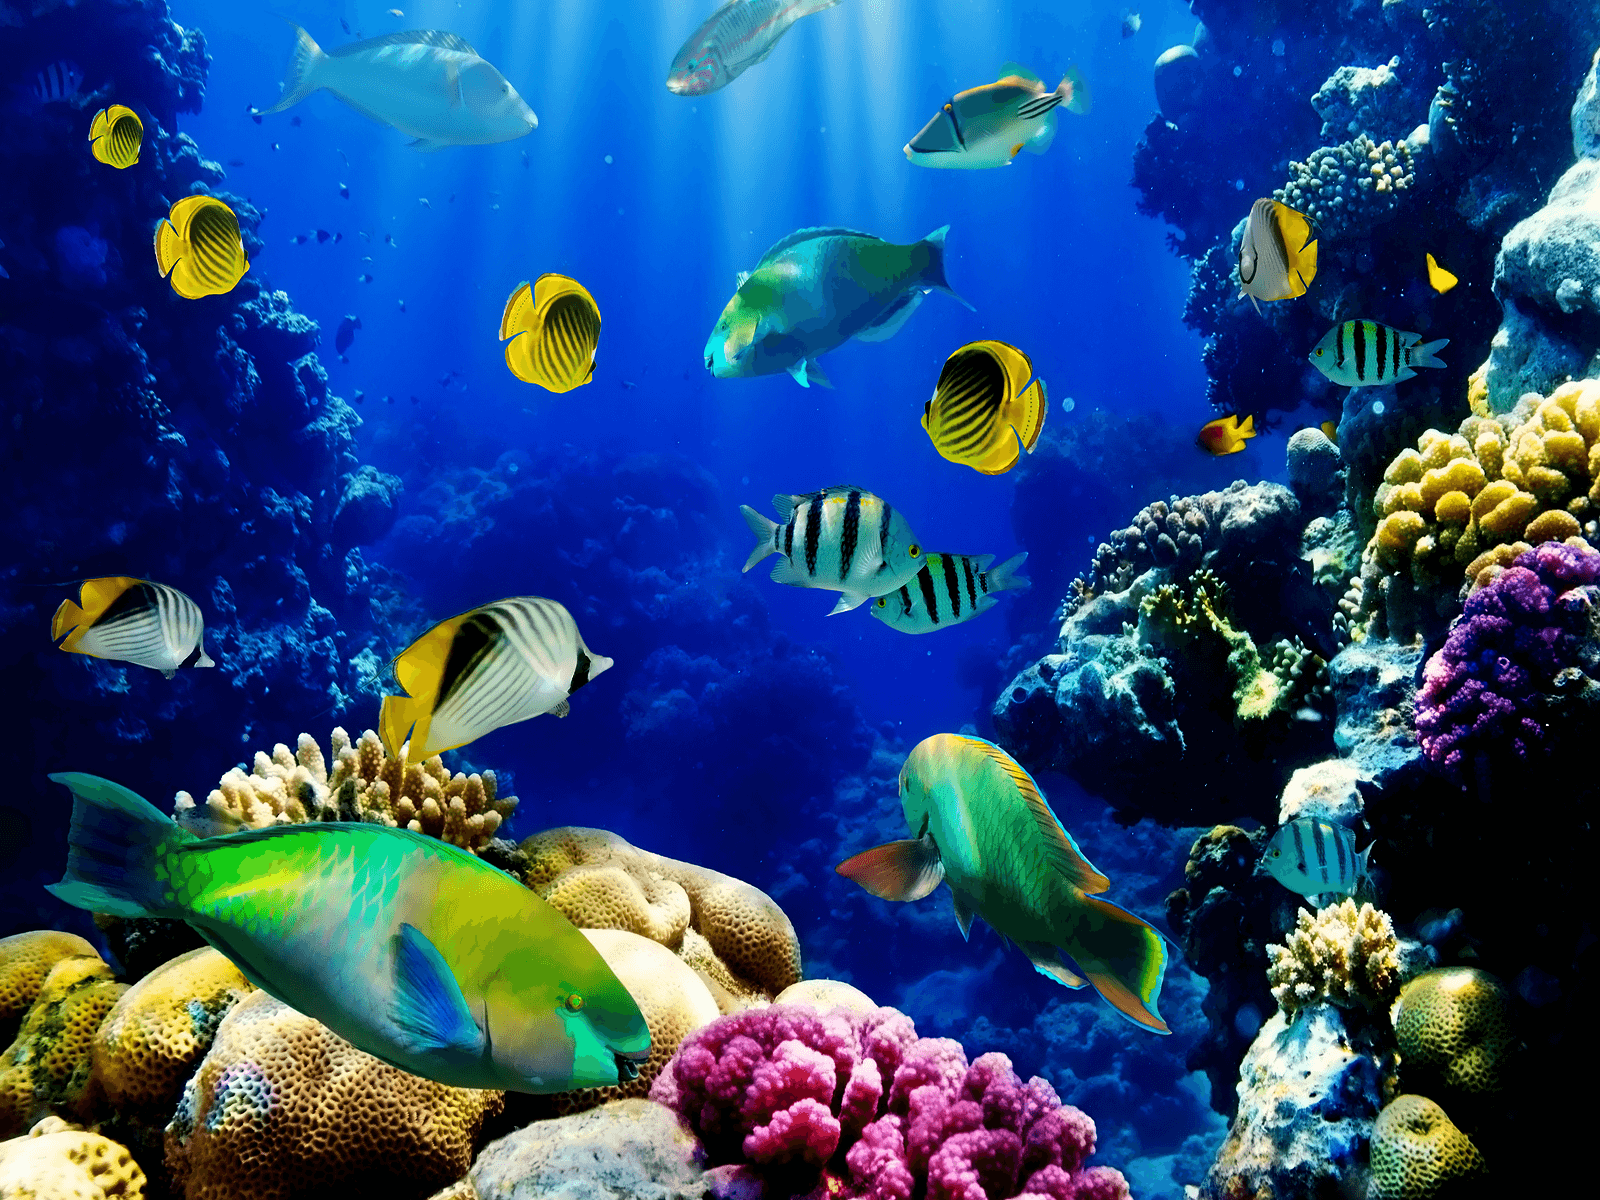 Download Aquarium wallpapers for mobile phone free Aquarium HD pictures